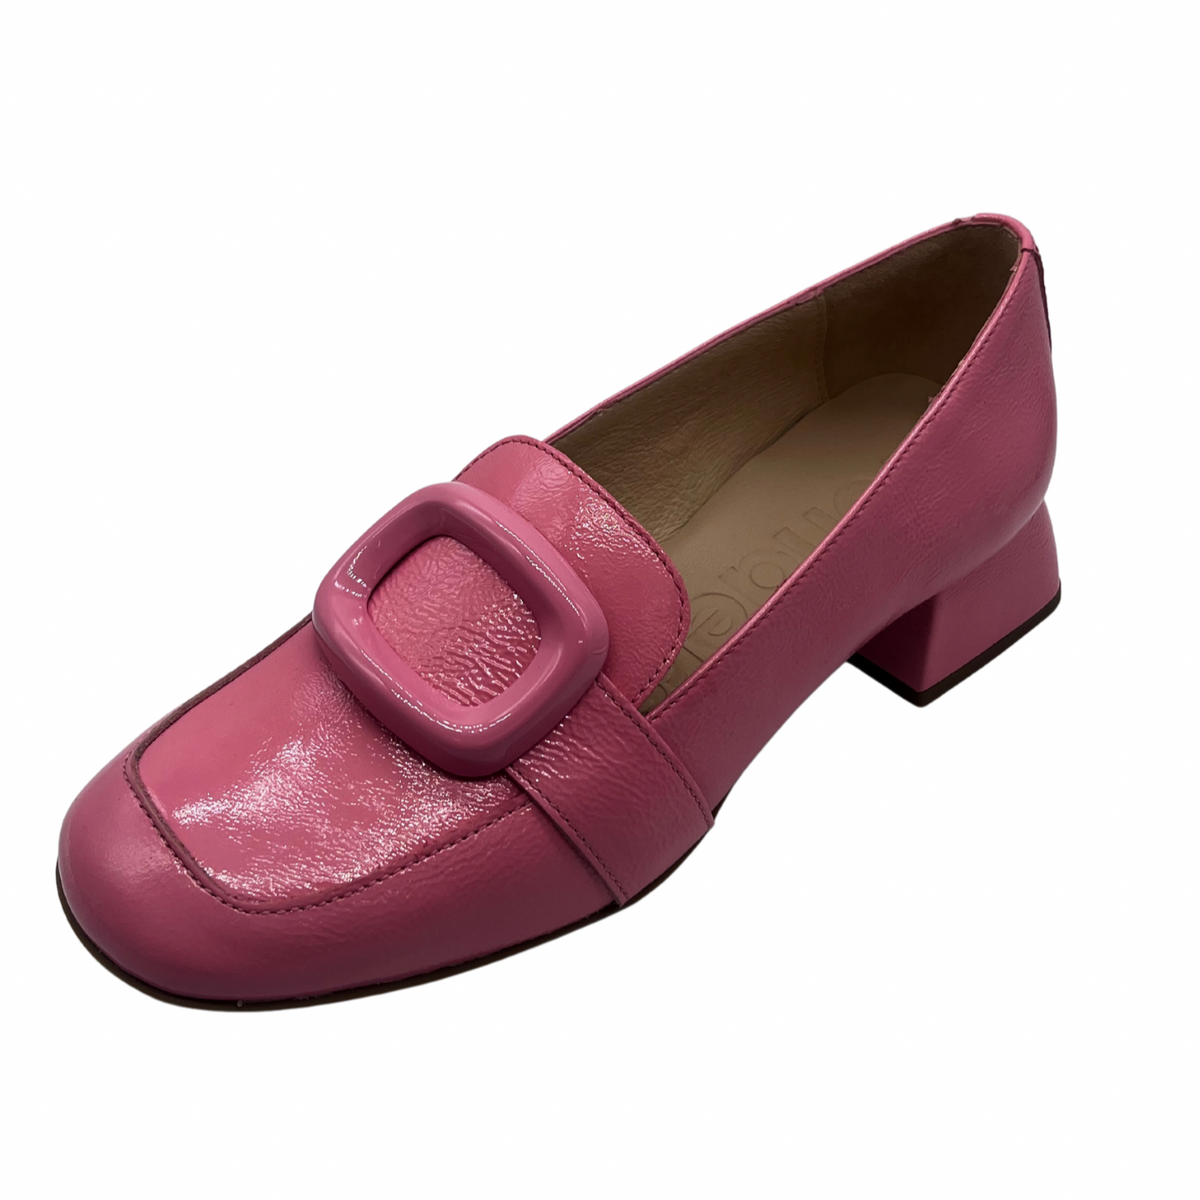 Wonders Patent Pink Low Heel